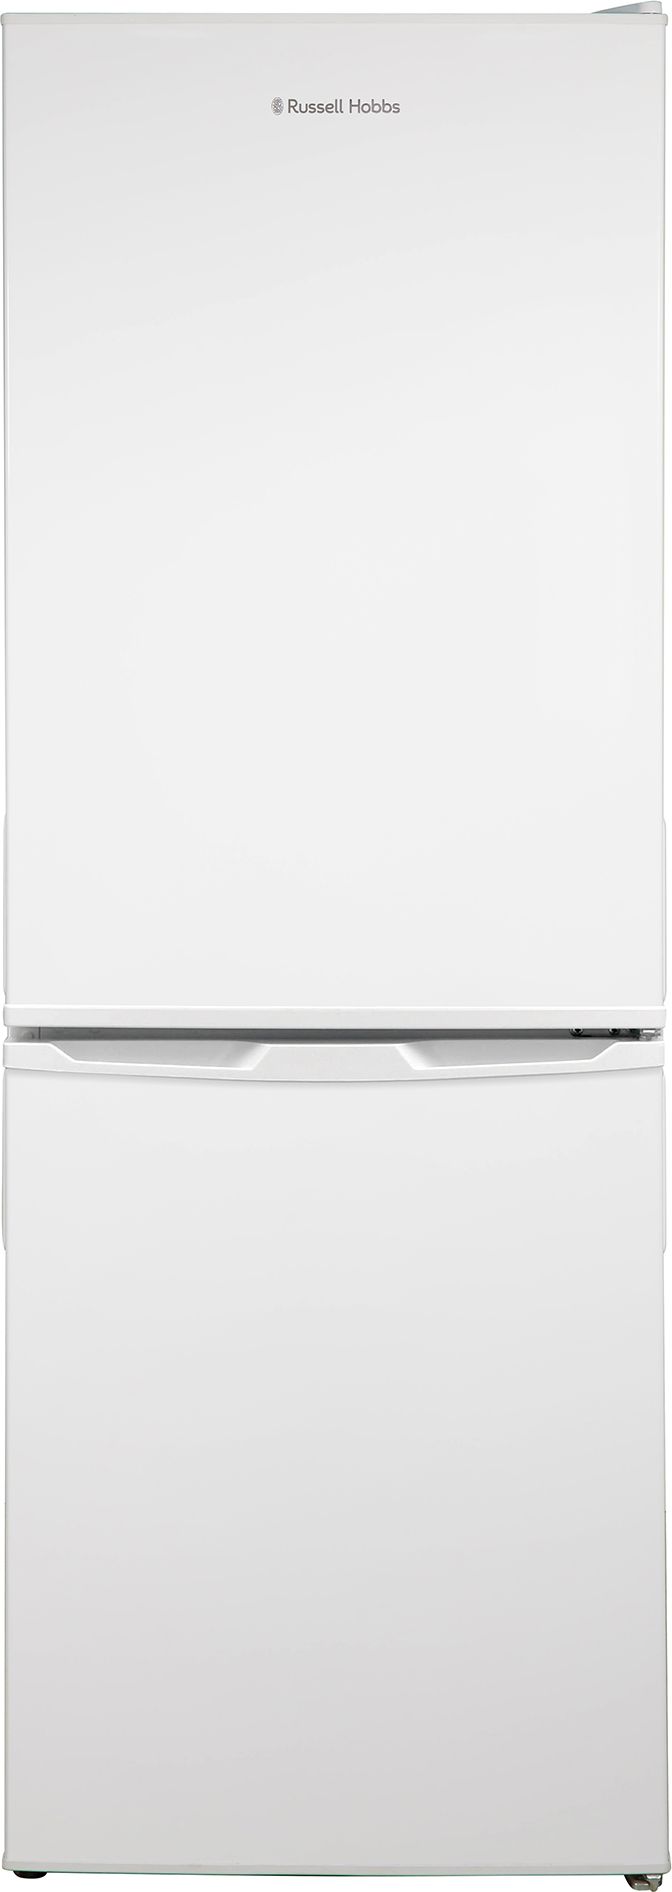 Russell Hobbs RH50FF145 Compact 145cm High 60/40 Fridge Freezer - White - F Rated, White